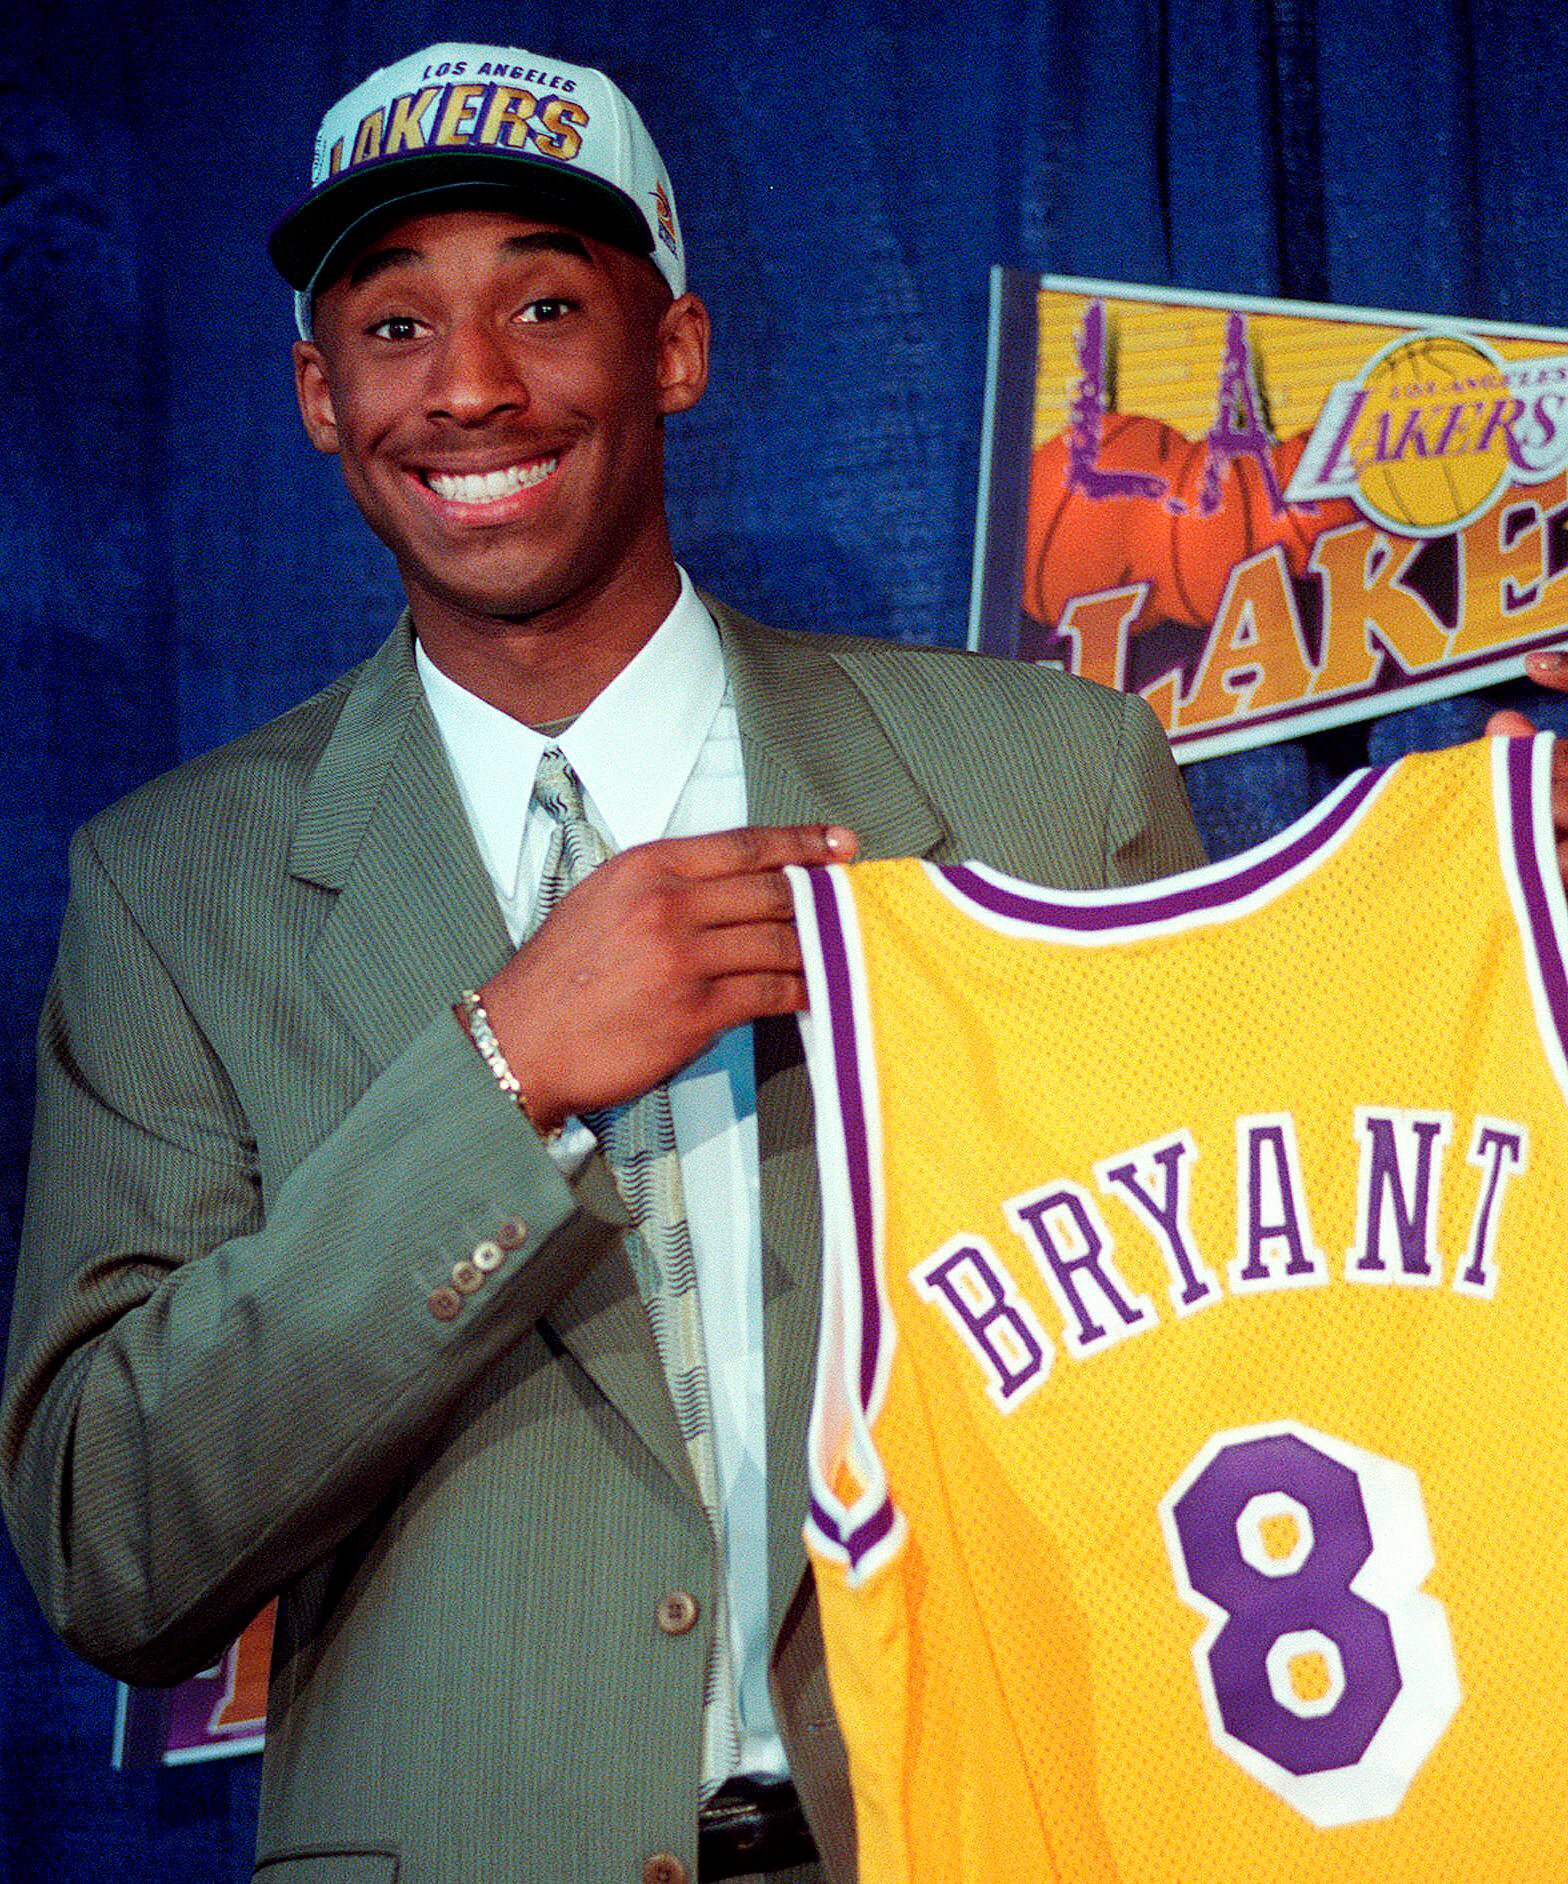 The Kobe Bryant Jersey: Past, Present & Future - Boardroom